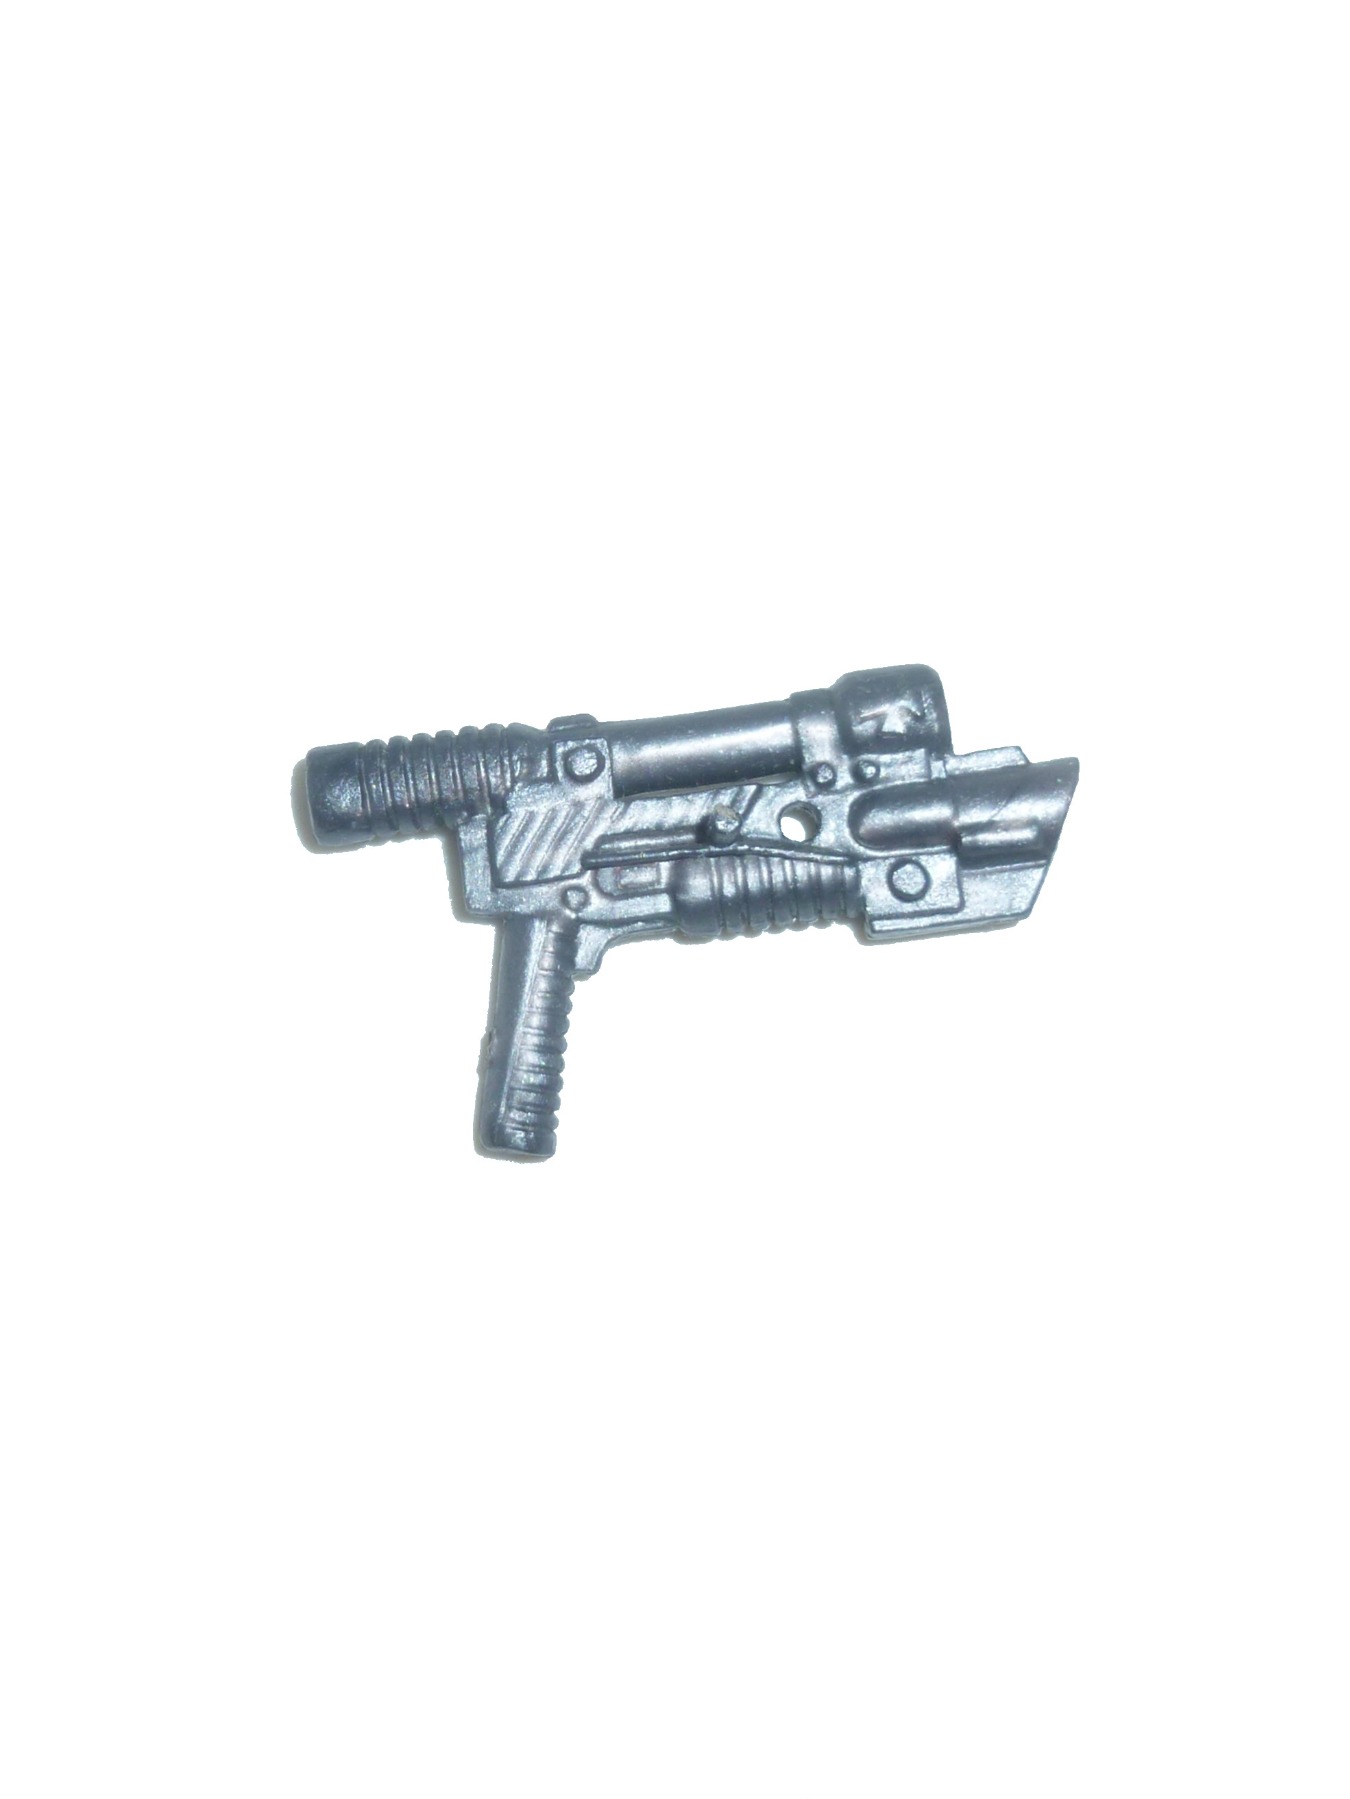 Castle Grayskull - Weapon / blaster accessory